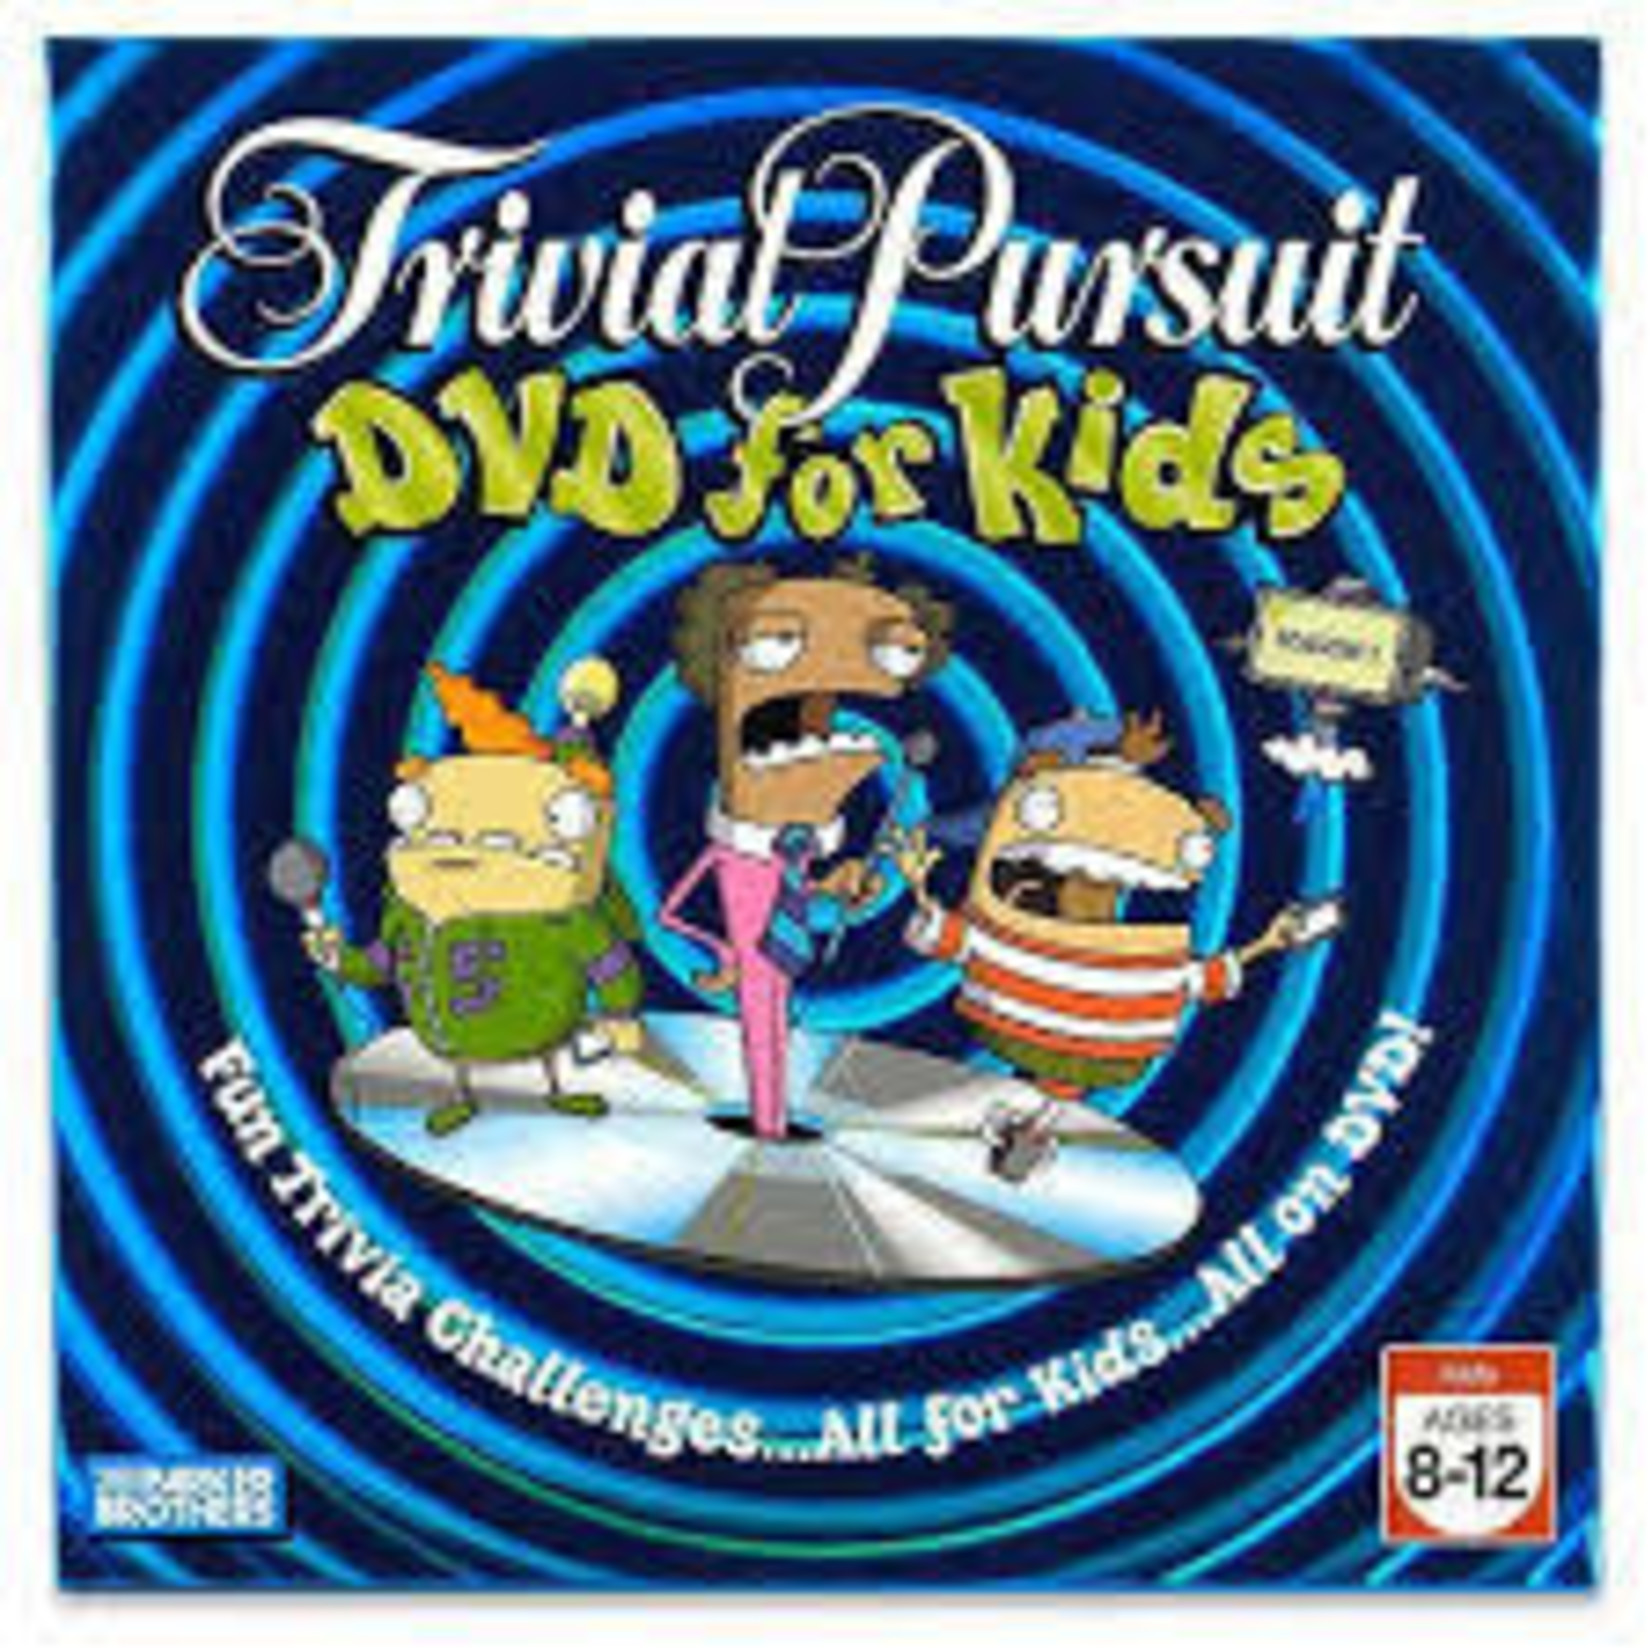 Trivial Pursuit: DVD for Kids